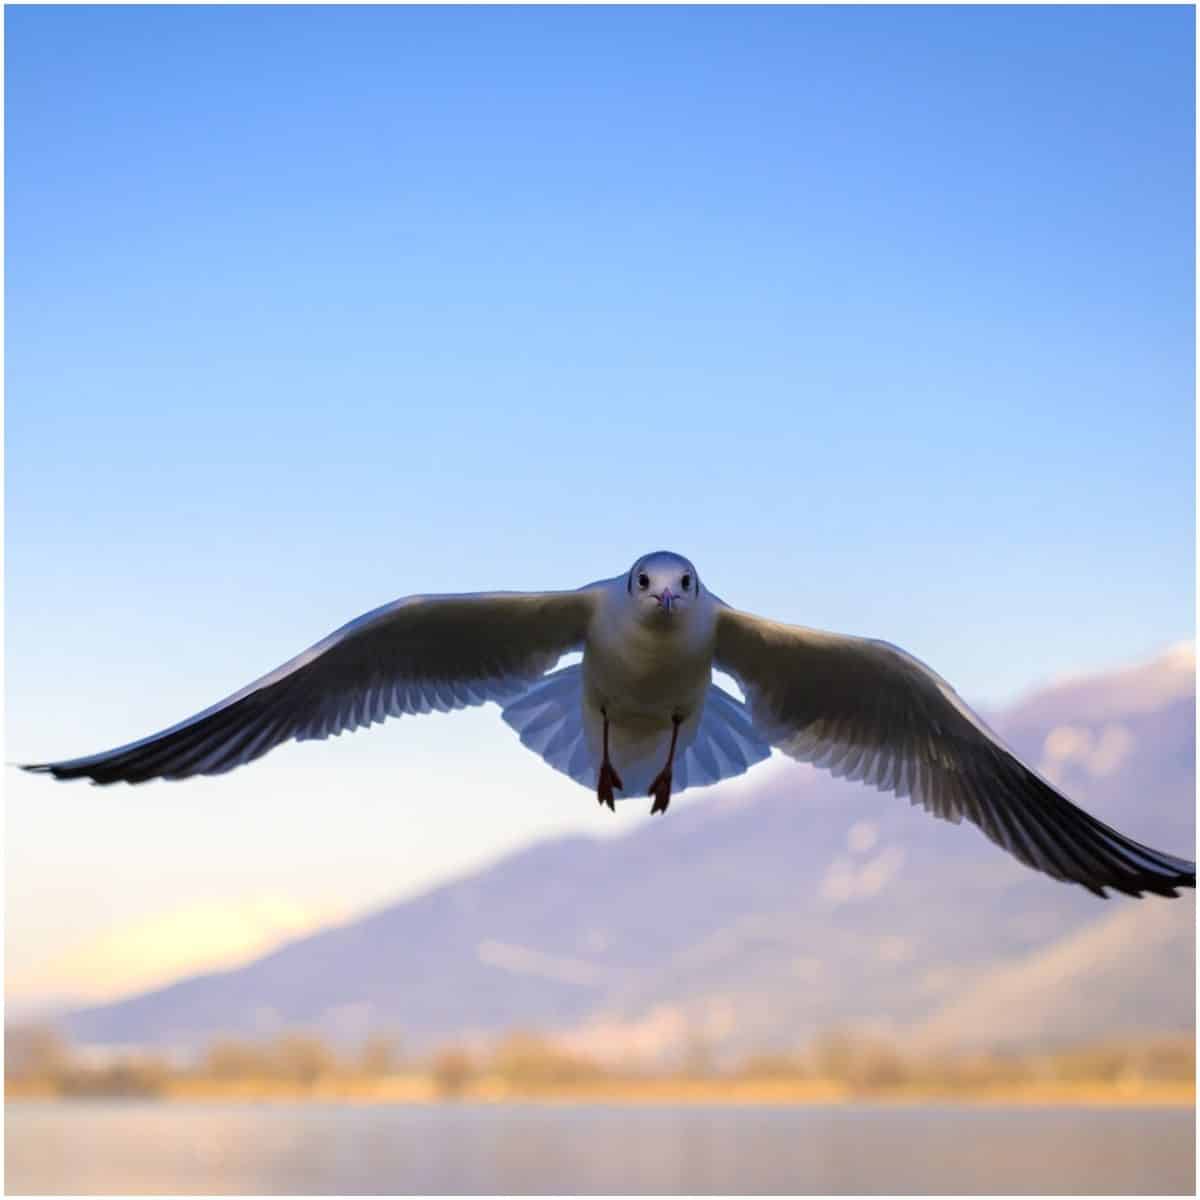 Spiritual meaning of birds flying in front of you - Awakening State